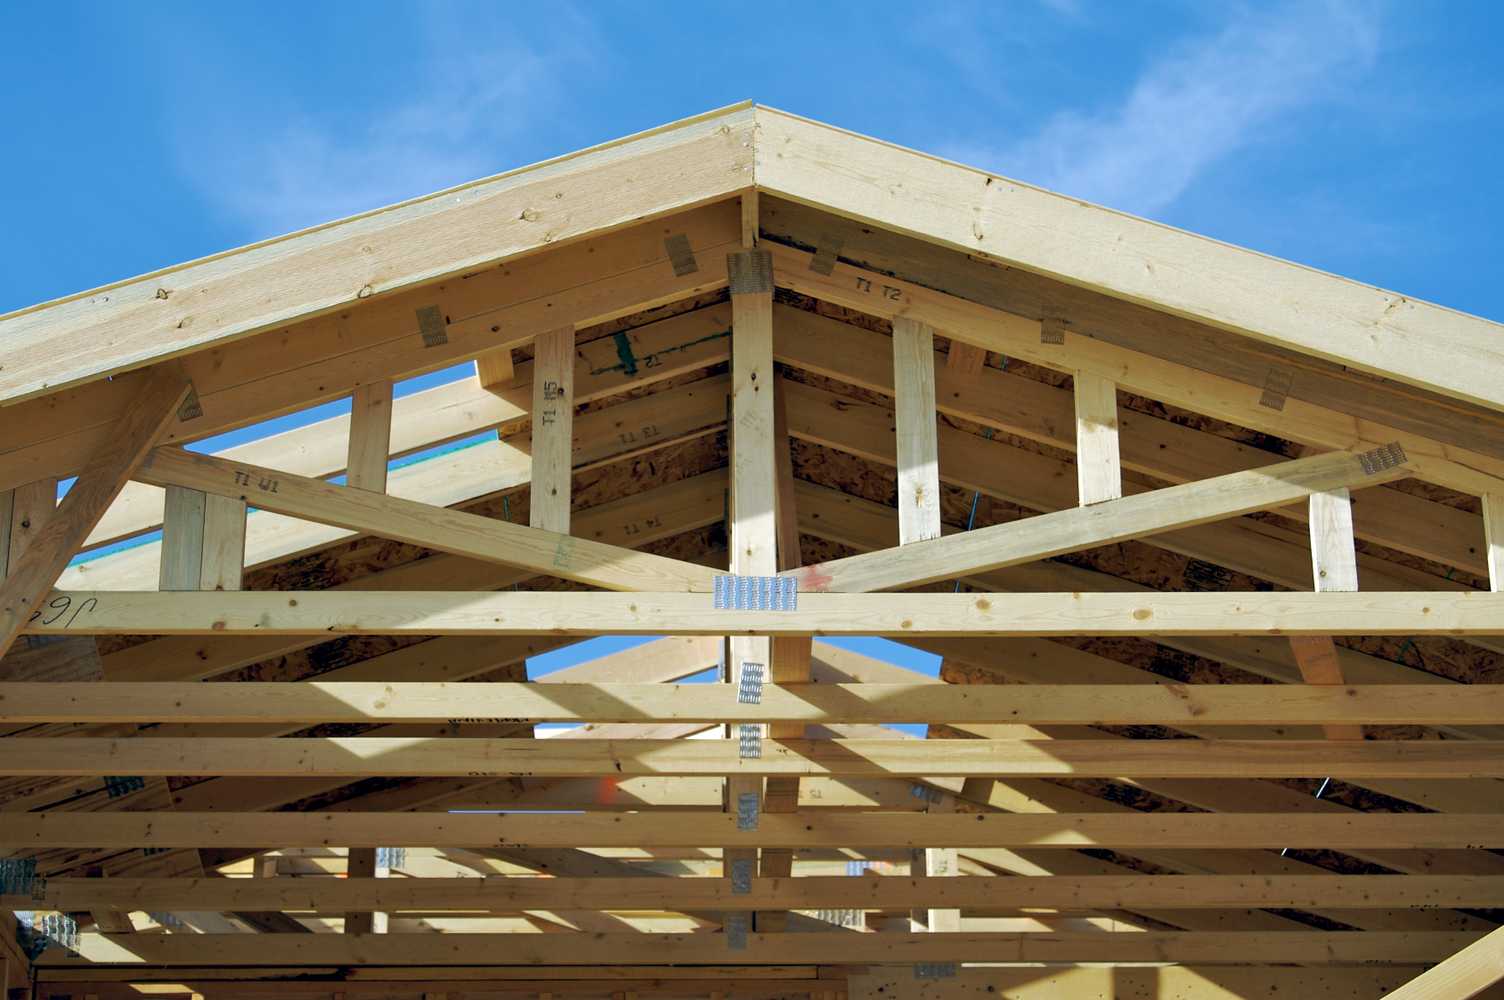 Siding Contractor, Roof Repair, Slate Roof, Builder, Roofing Contractors 